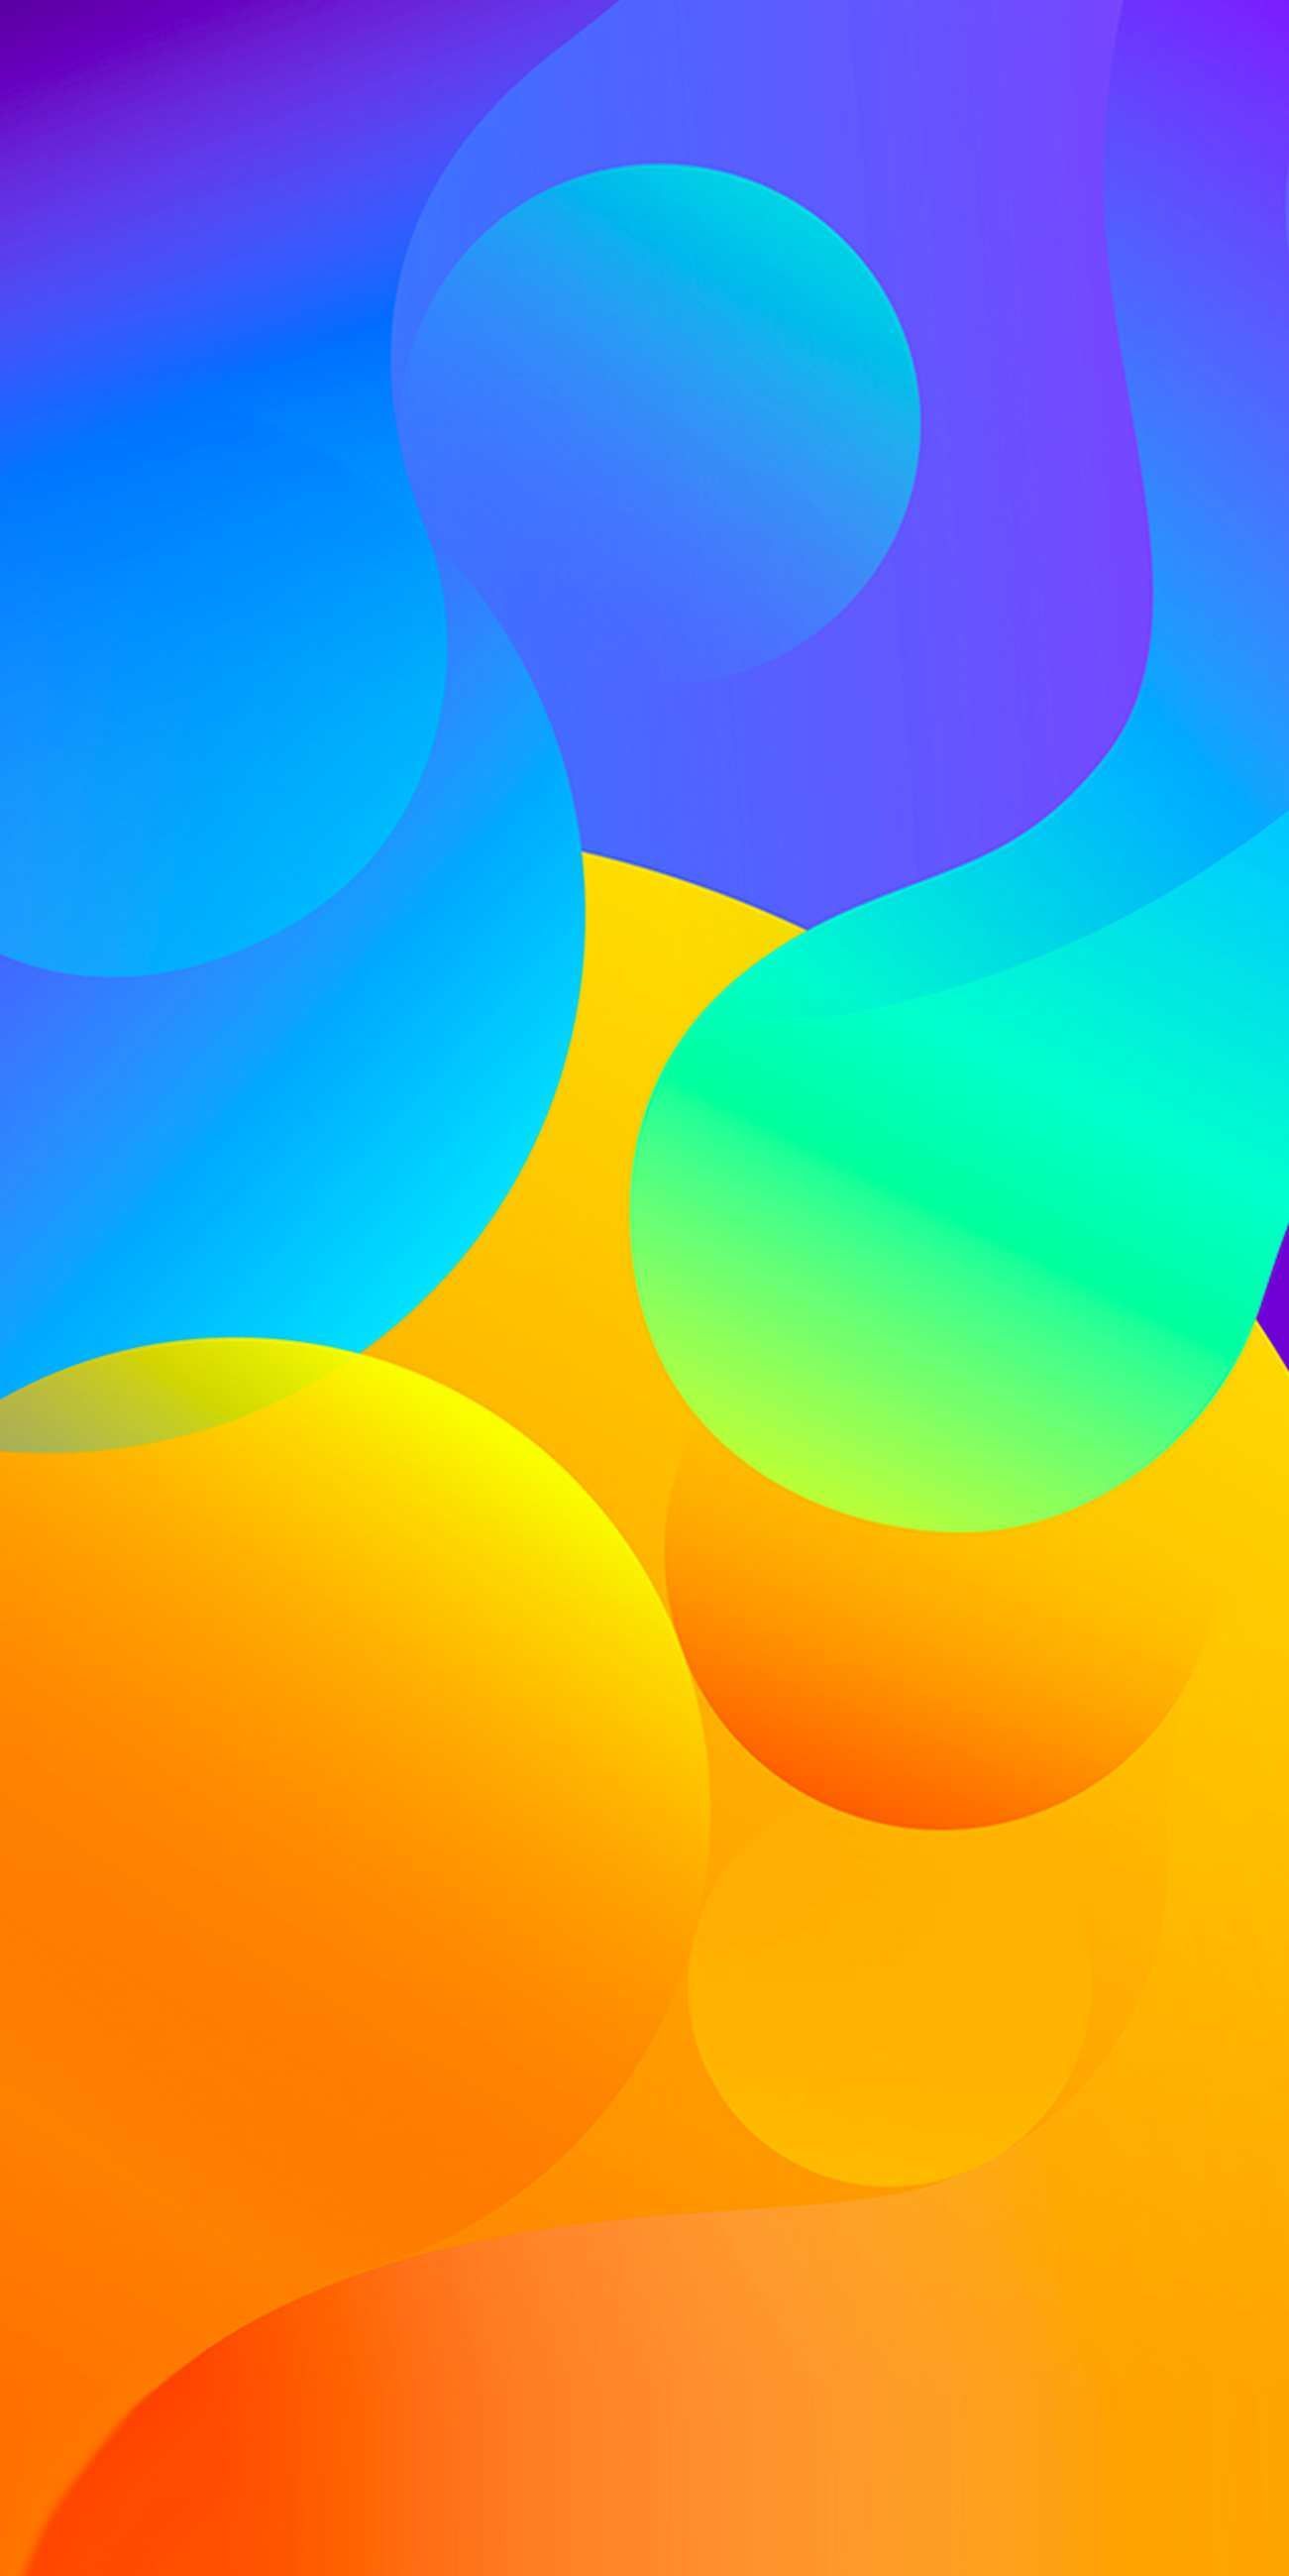 Colour Circles Abstract iPhone Wallpaper 4K. Color wallpaper iphone, Abstract iphone wallpaper, iPhone wallpaper